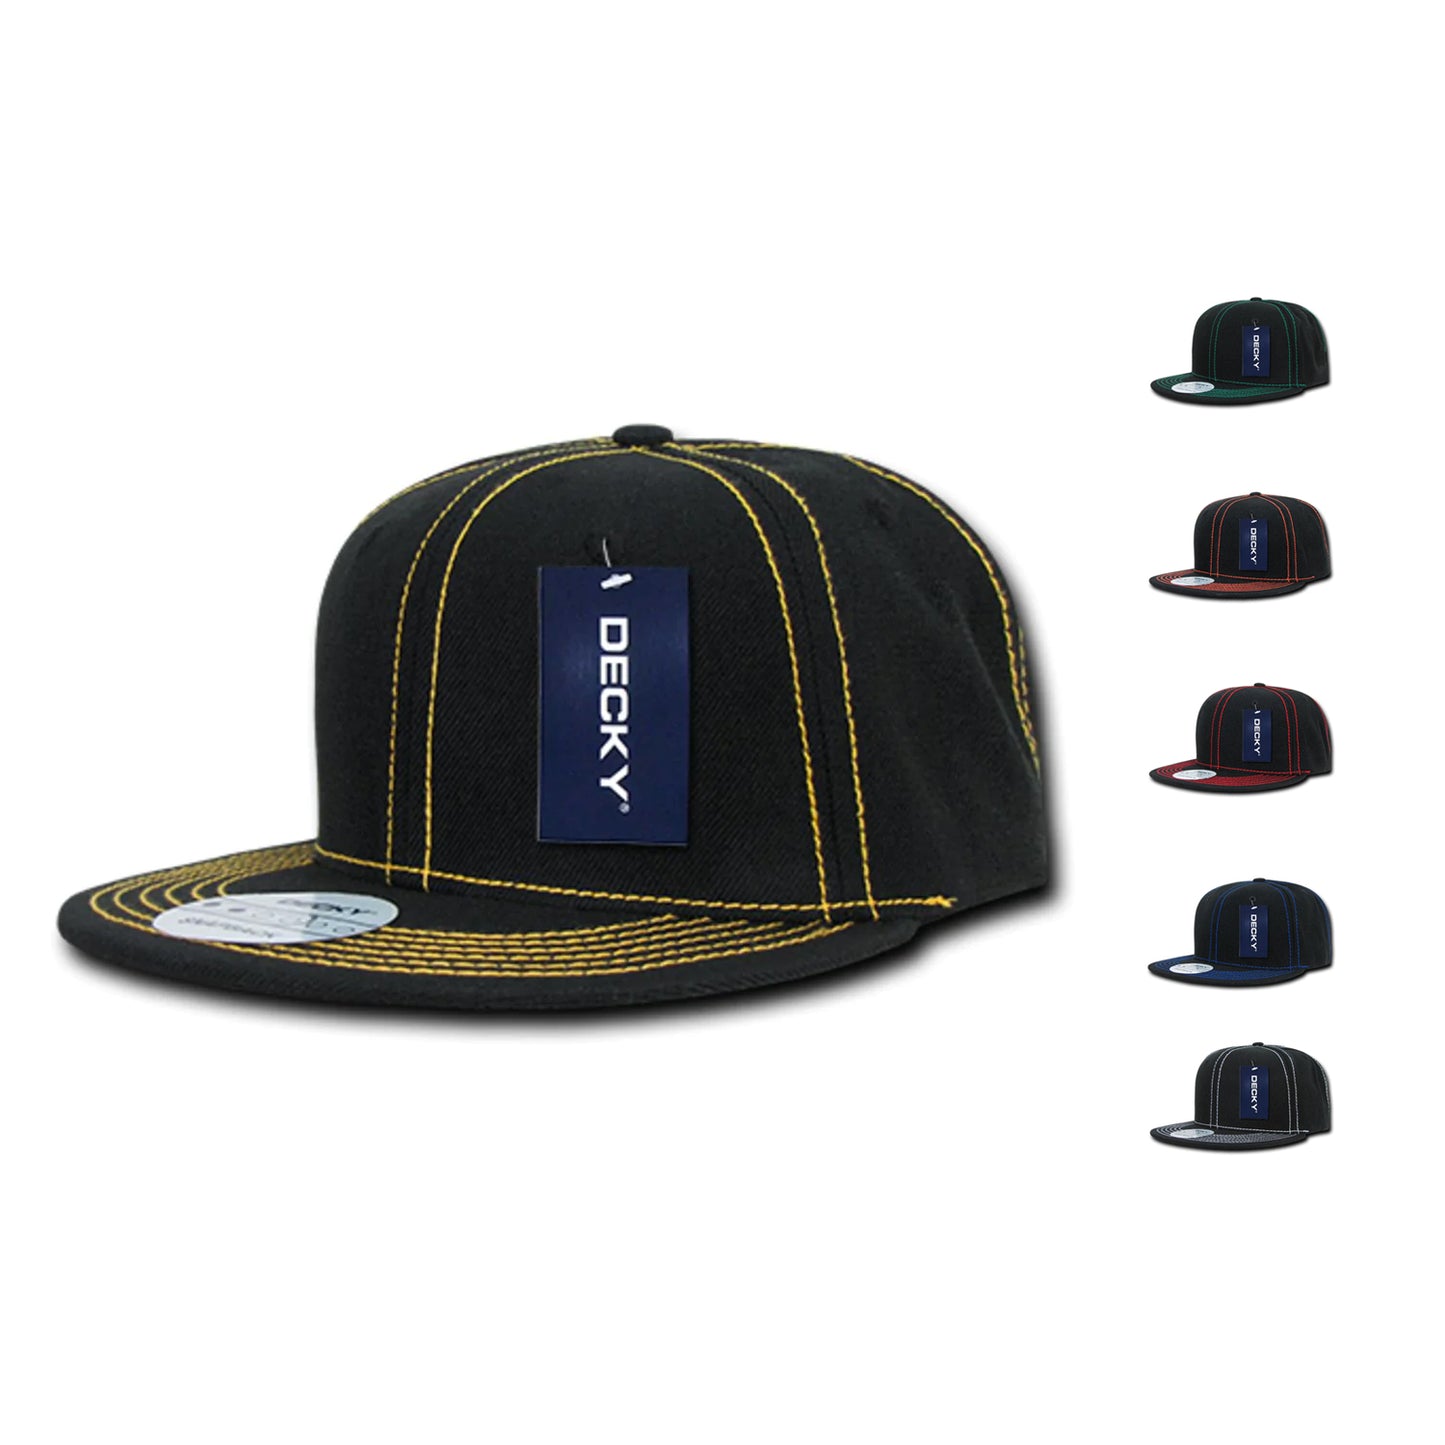 Decky 358 Contrast Stitch Snapback Hats High Profile 6 Panel Flat Bill Baseball Caps